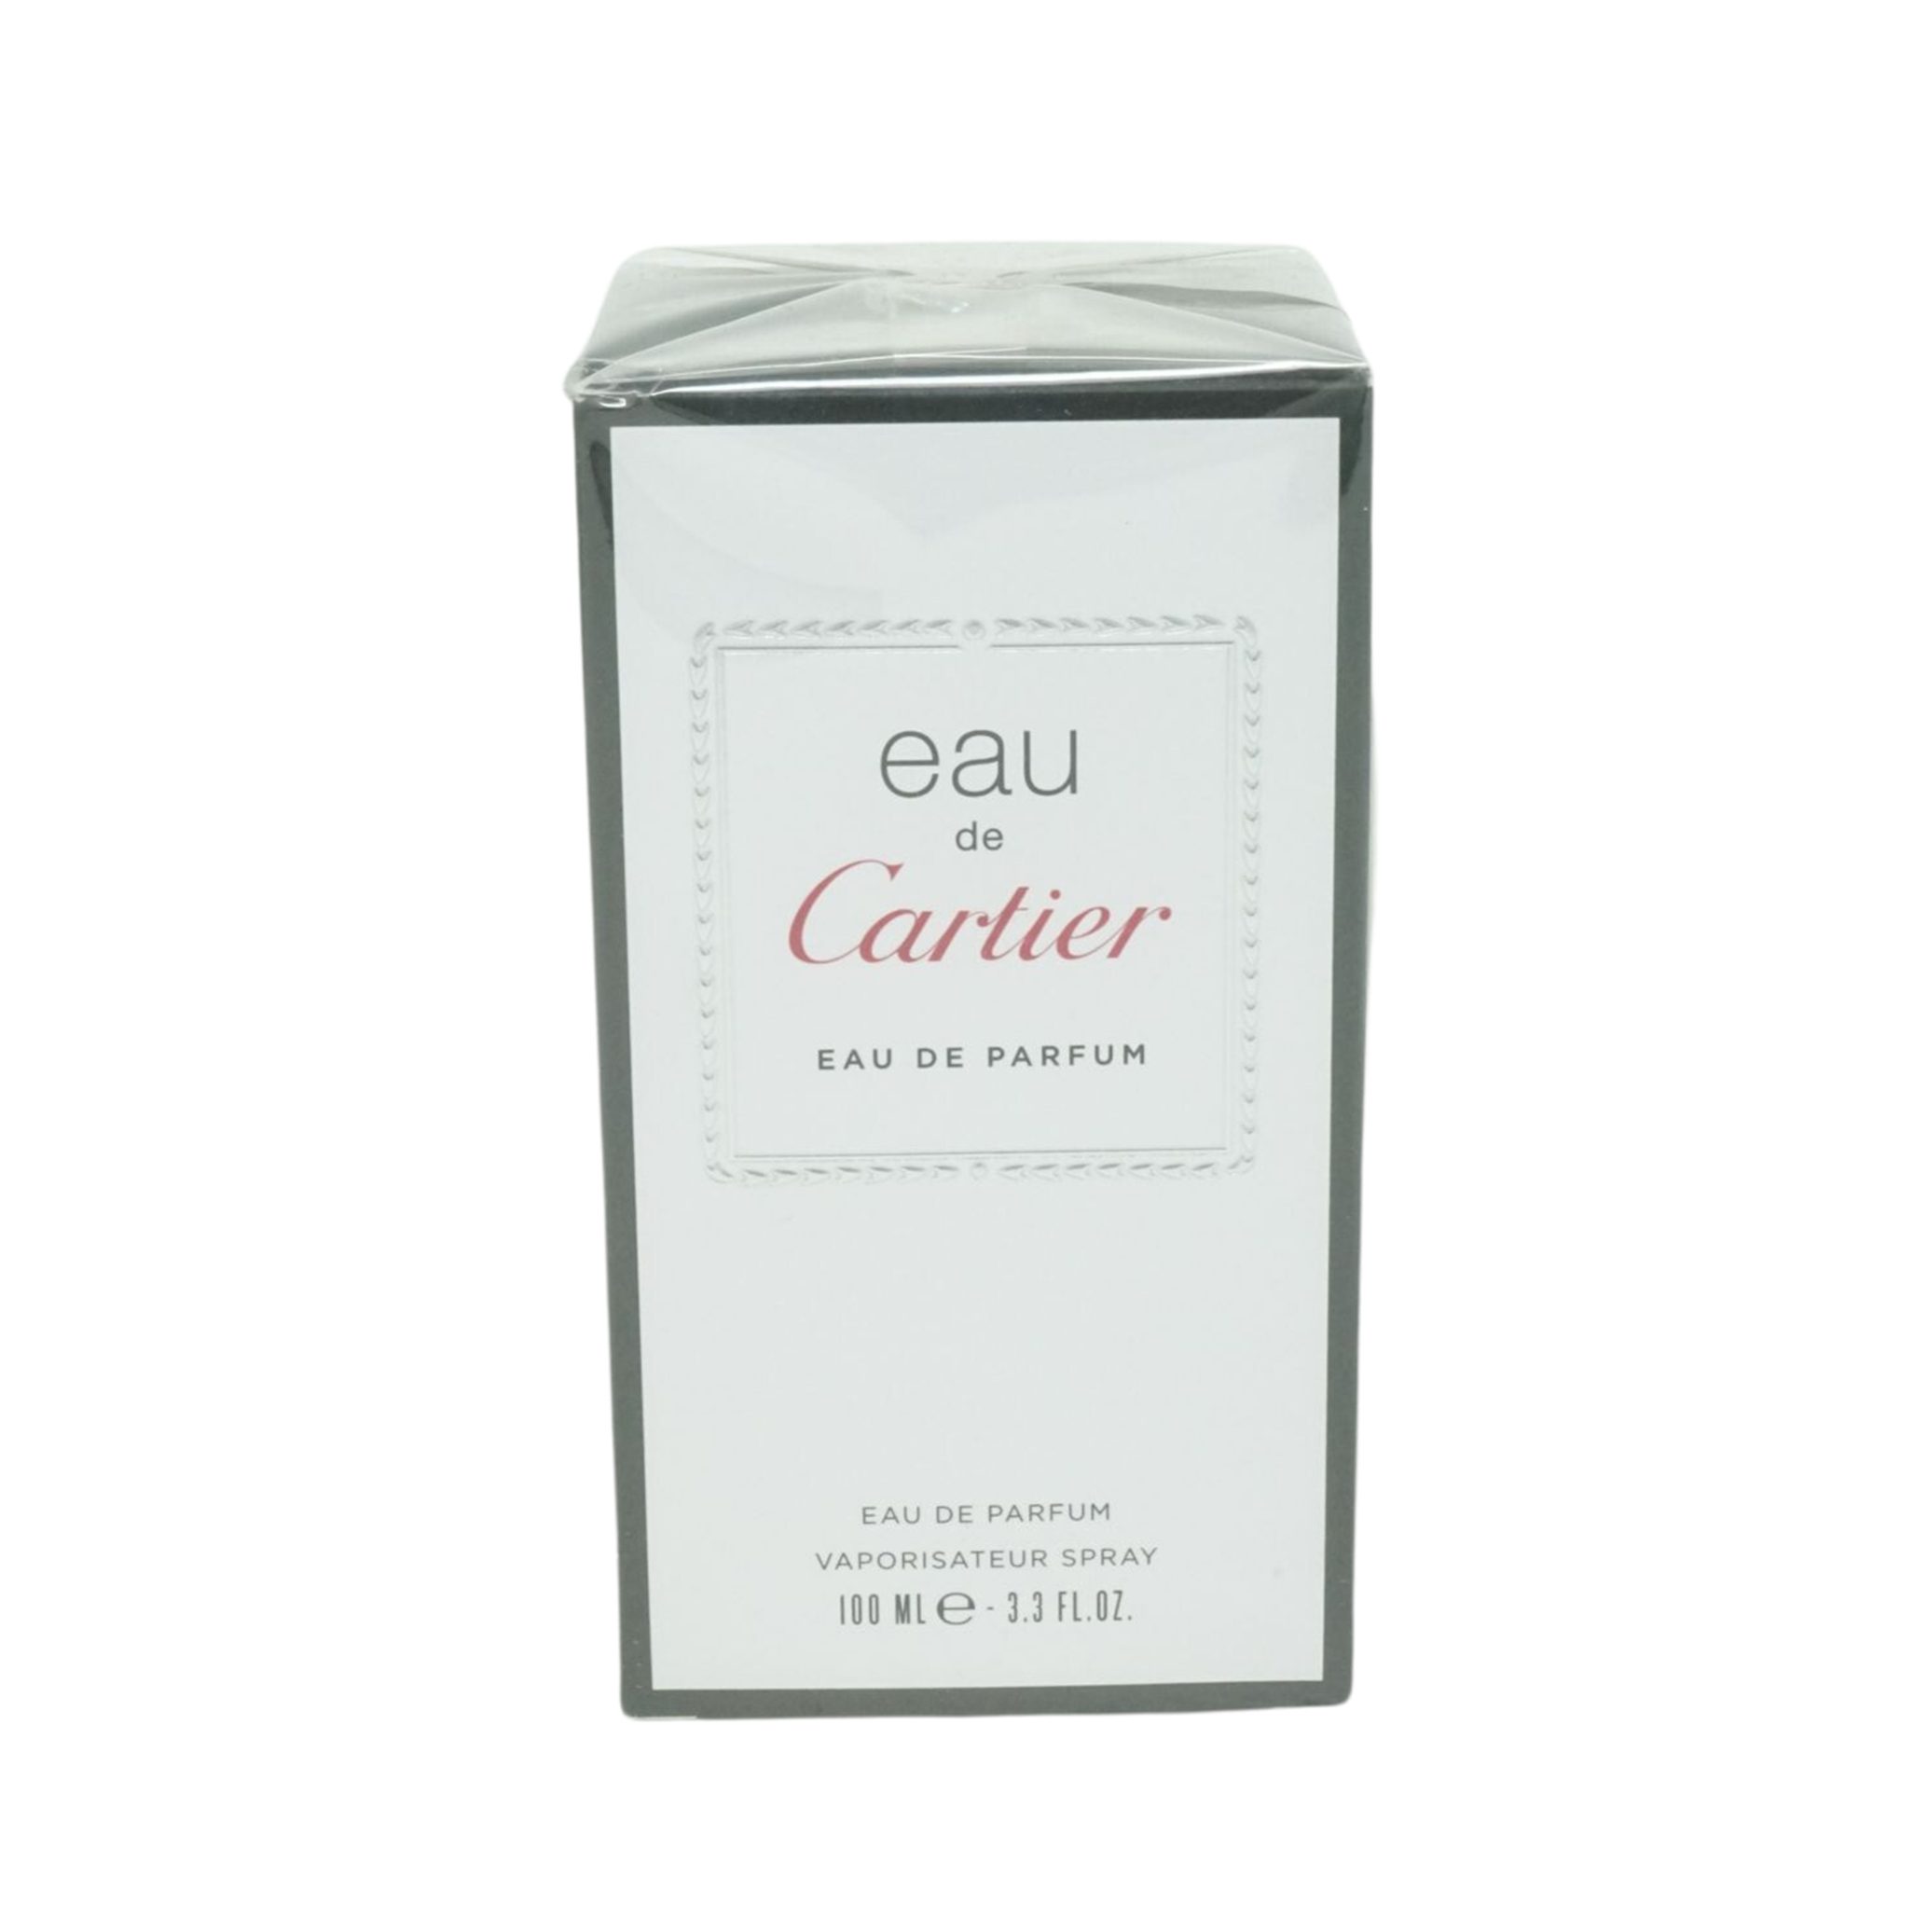 Cartier Eau de Parfum Cartier Eau de Cartier Eau de Parfum Spray 100ml